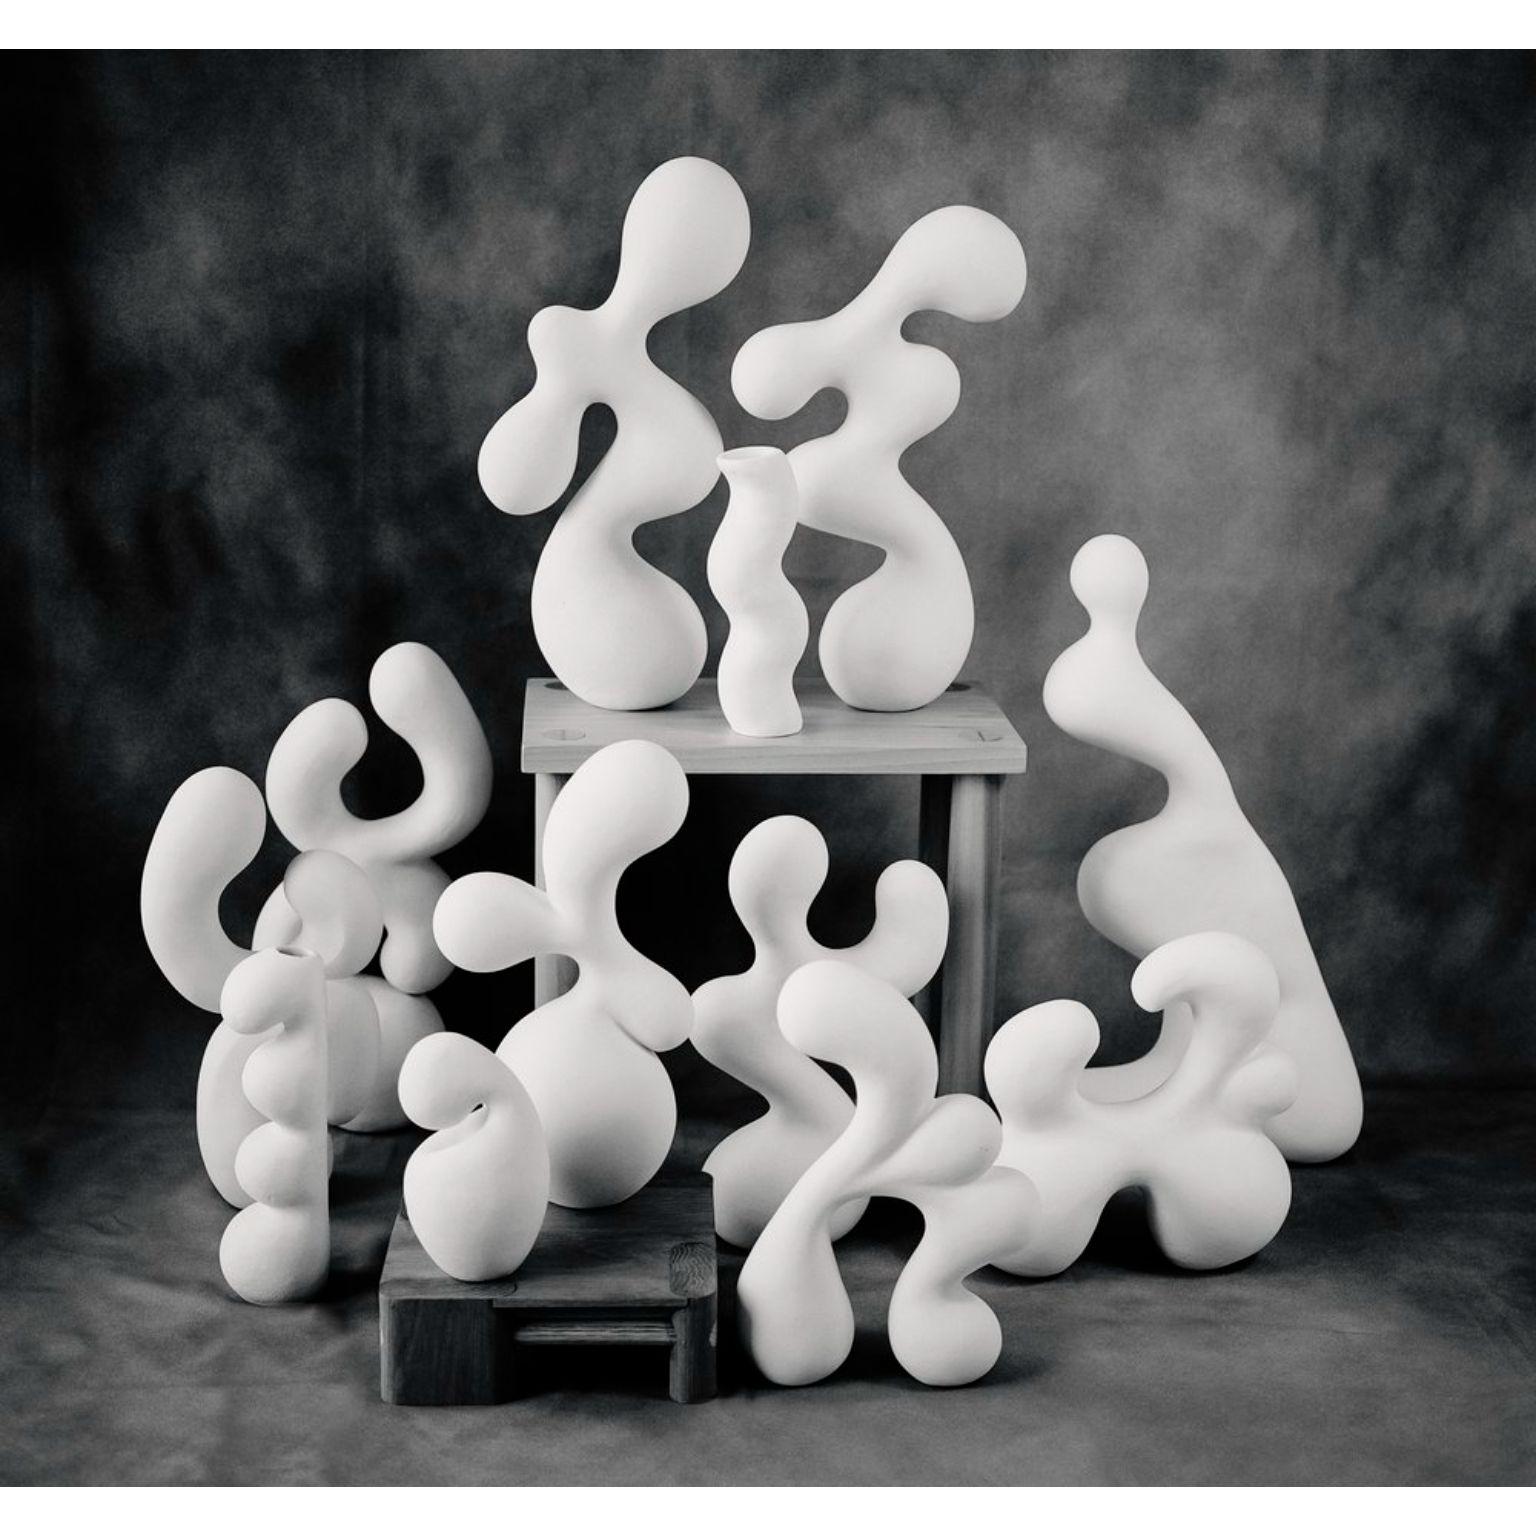 Pet by Elnaz Rafati (Sculpture 12).
Dimensions: D 36.9, W 12.7, H 63.5 cm.
Materials: Clay.

